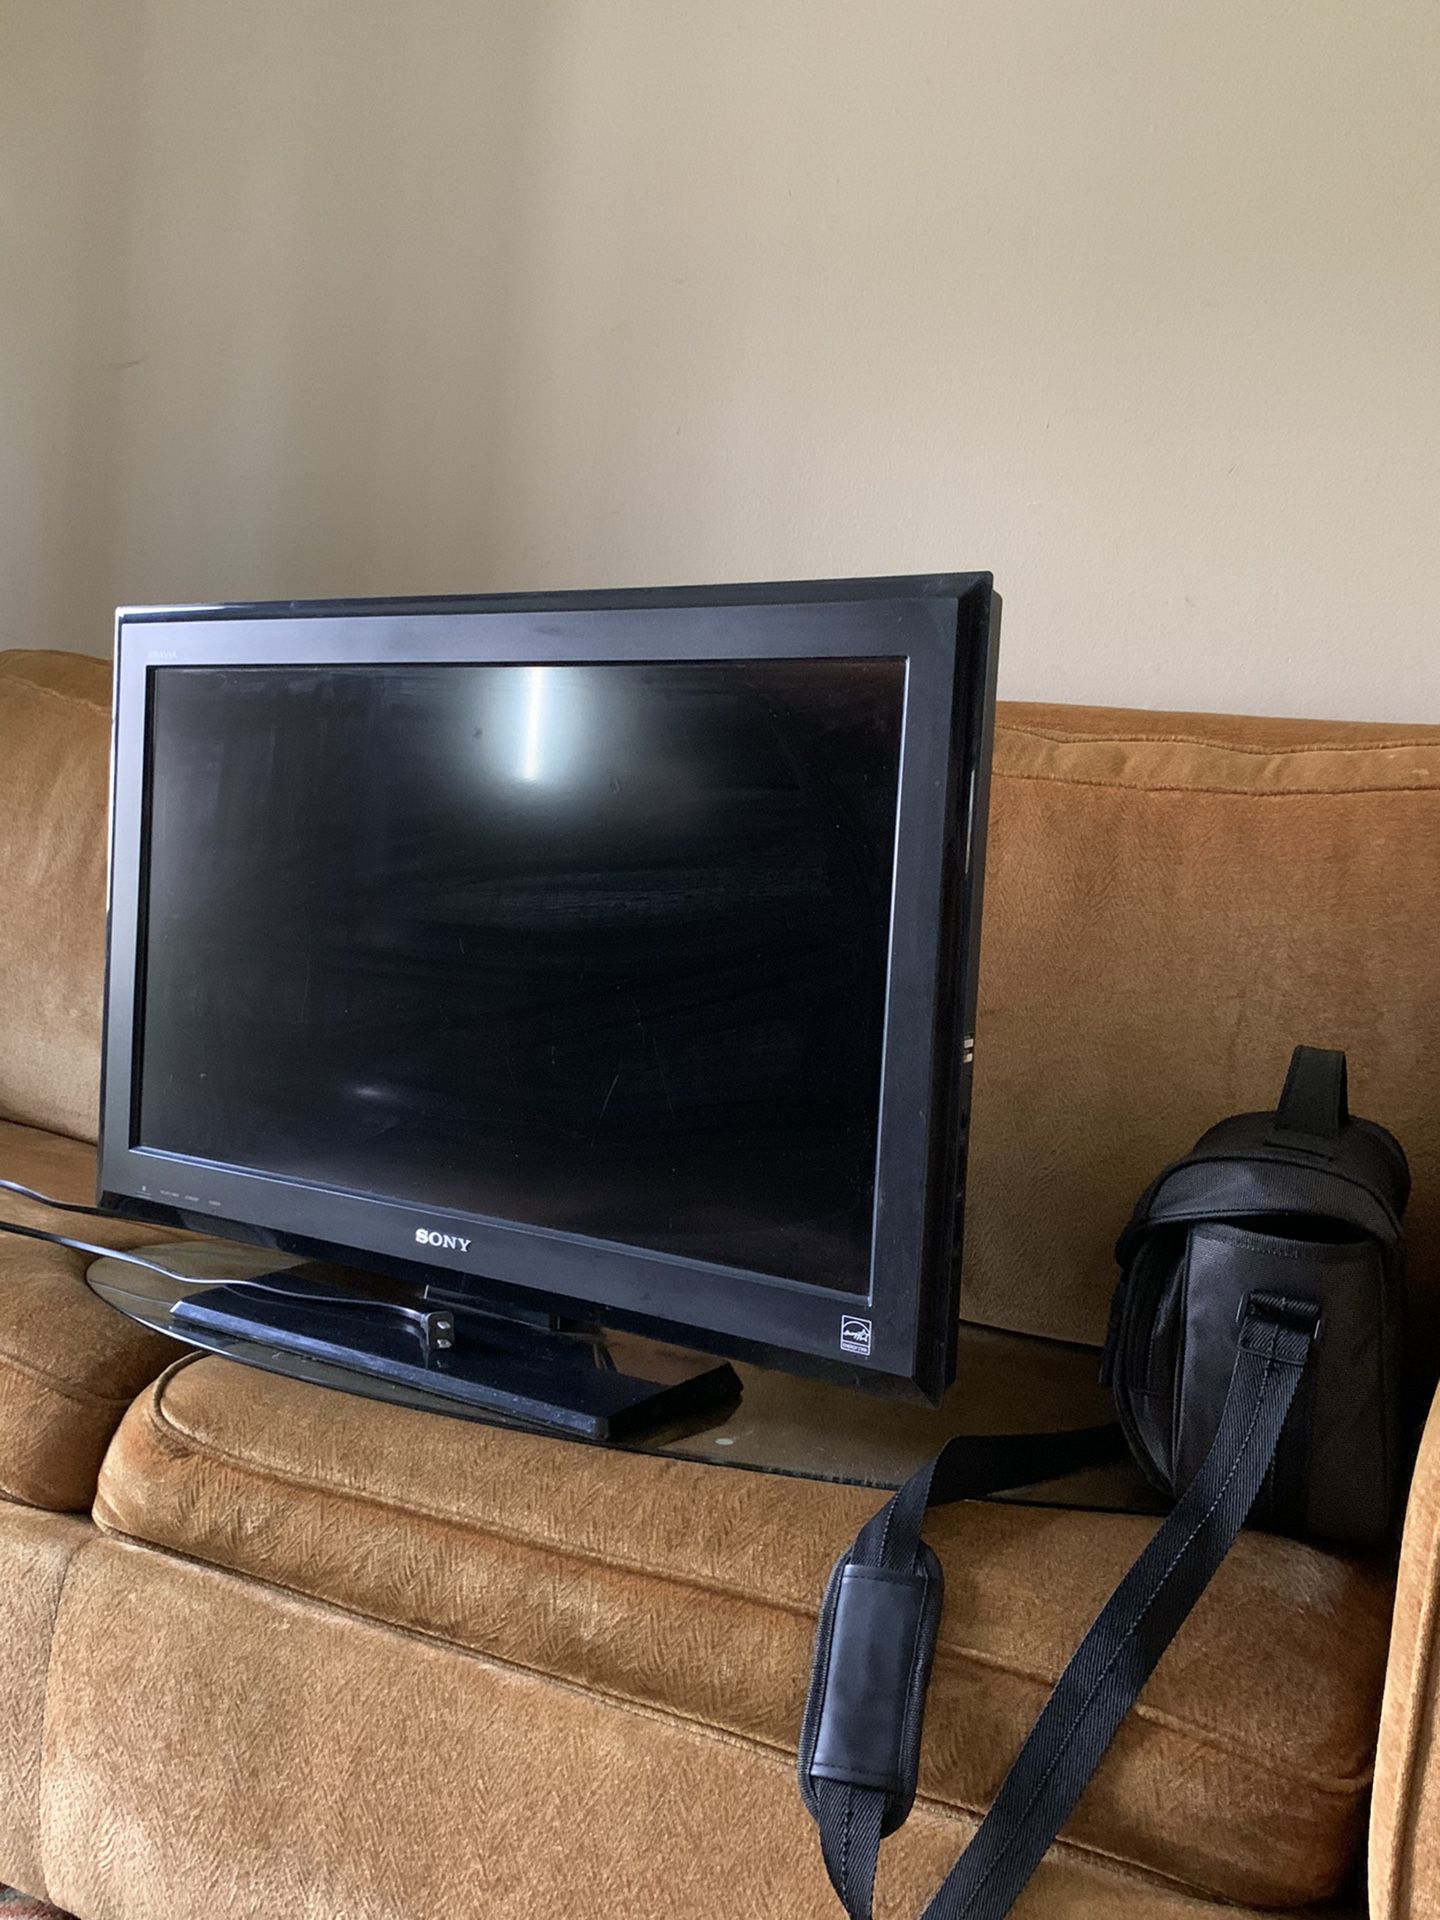 Sony 32” Flatscreen TV Model : KDL-32L5000